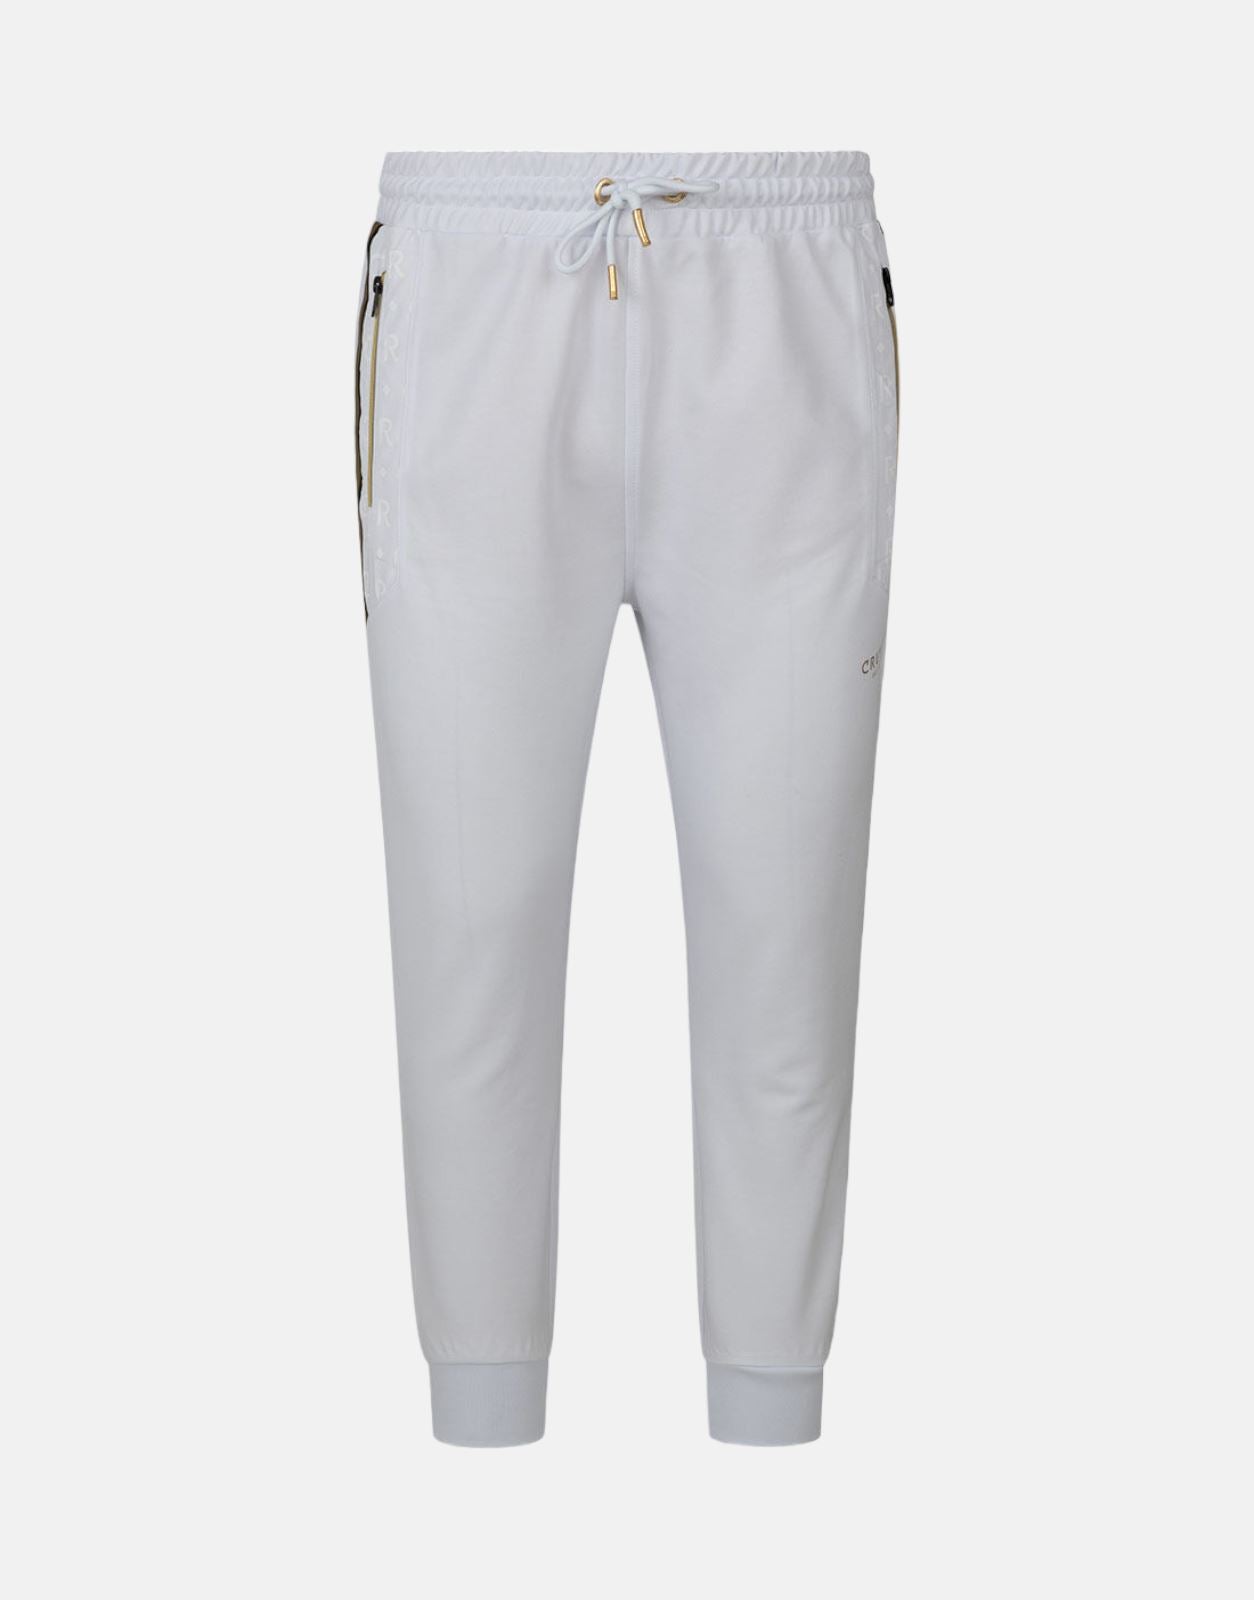 Cruyff Gregory White/Gold Sweatpants - Subwear